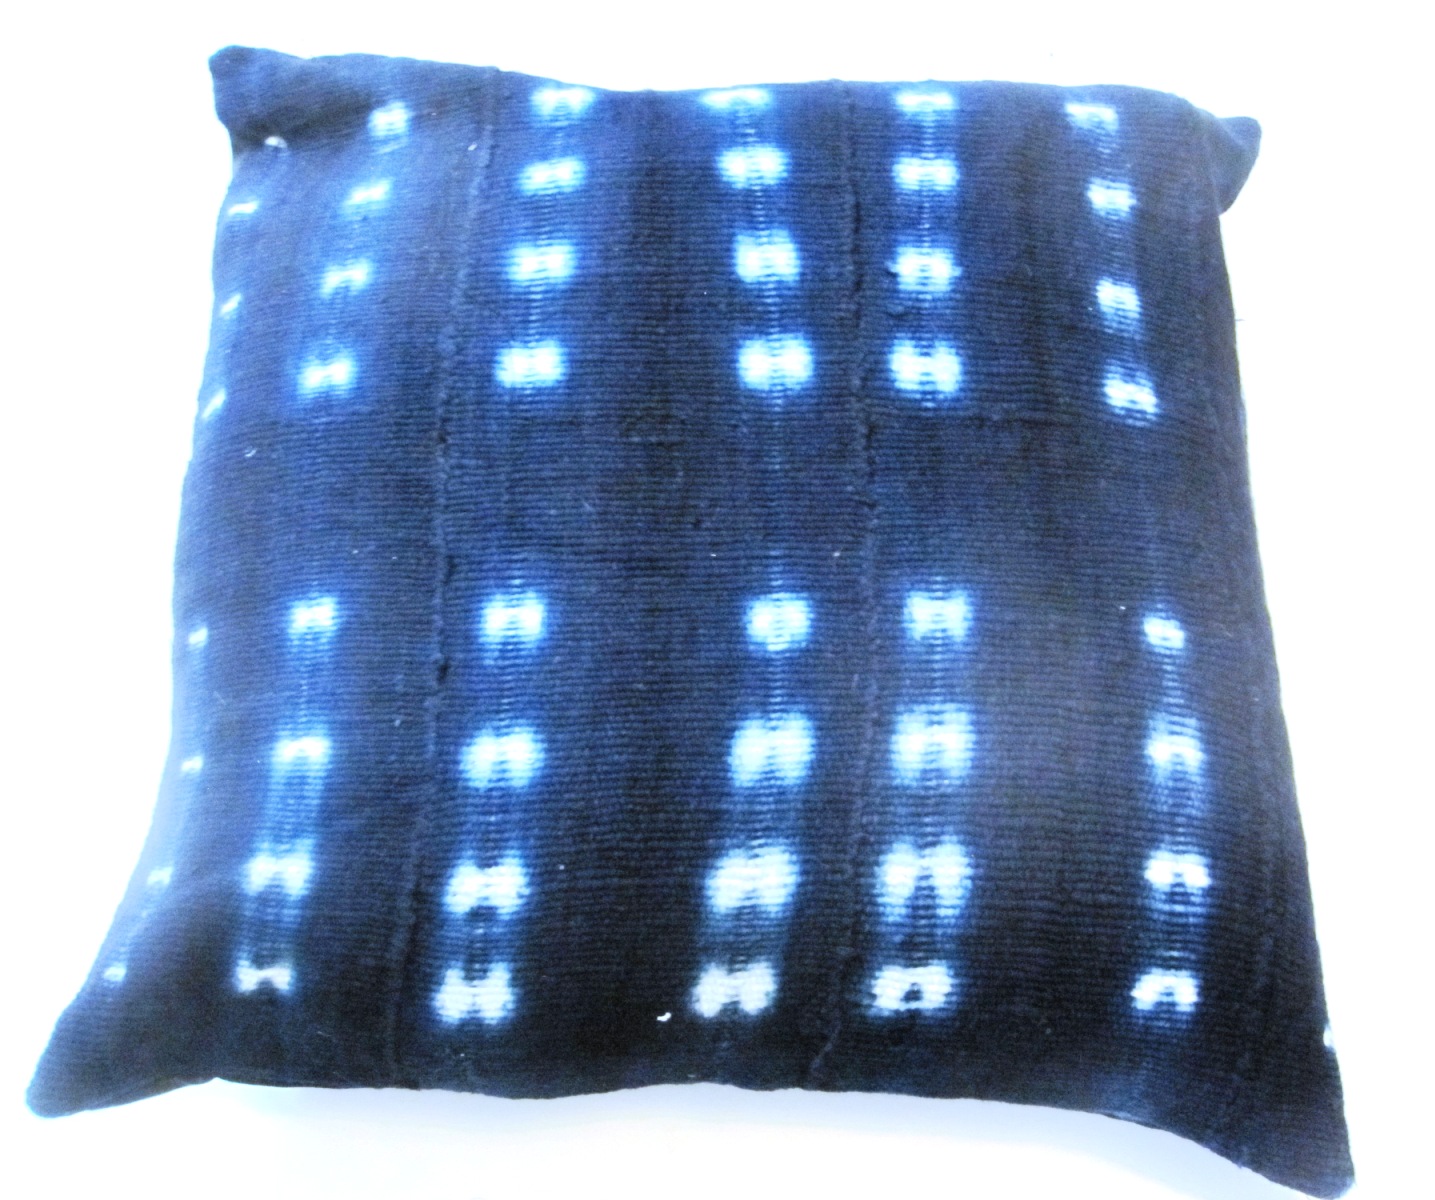 Bogolan Mud Cloth Pillow from Mali - Indigo Design